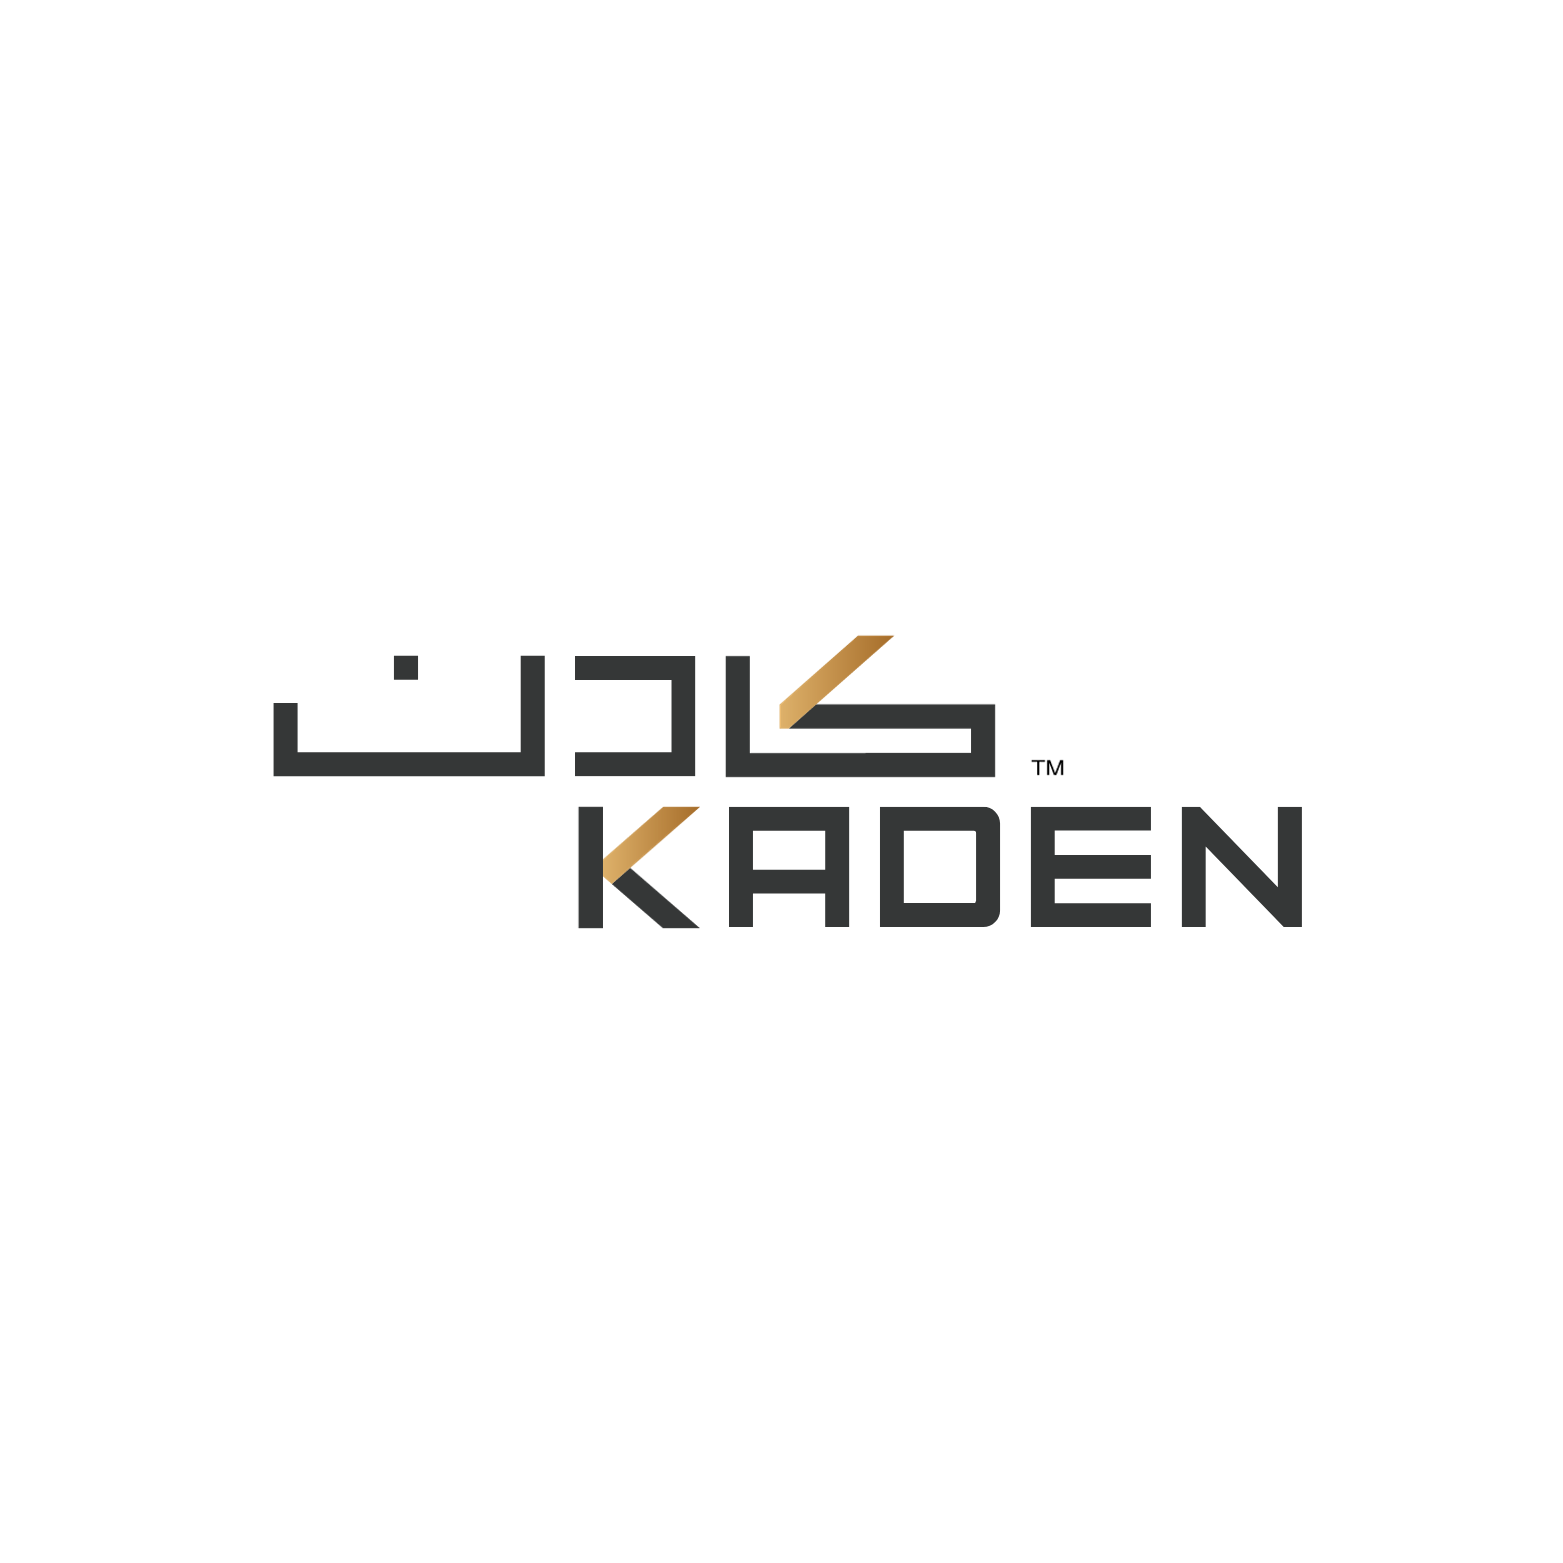 Kaden launch on 10 Jan 2015